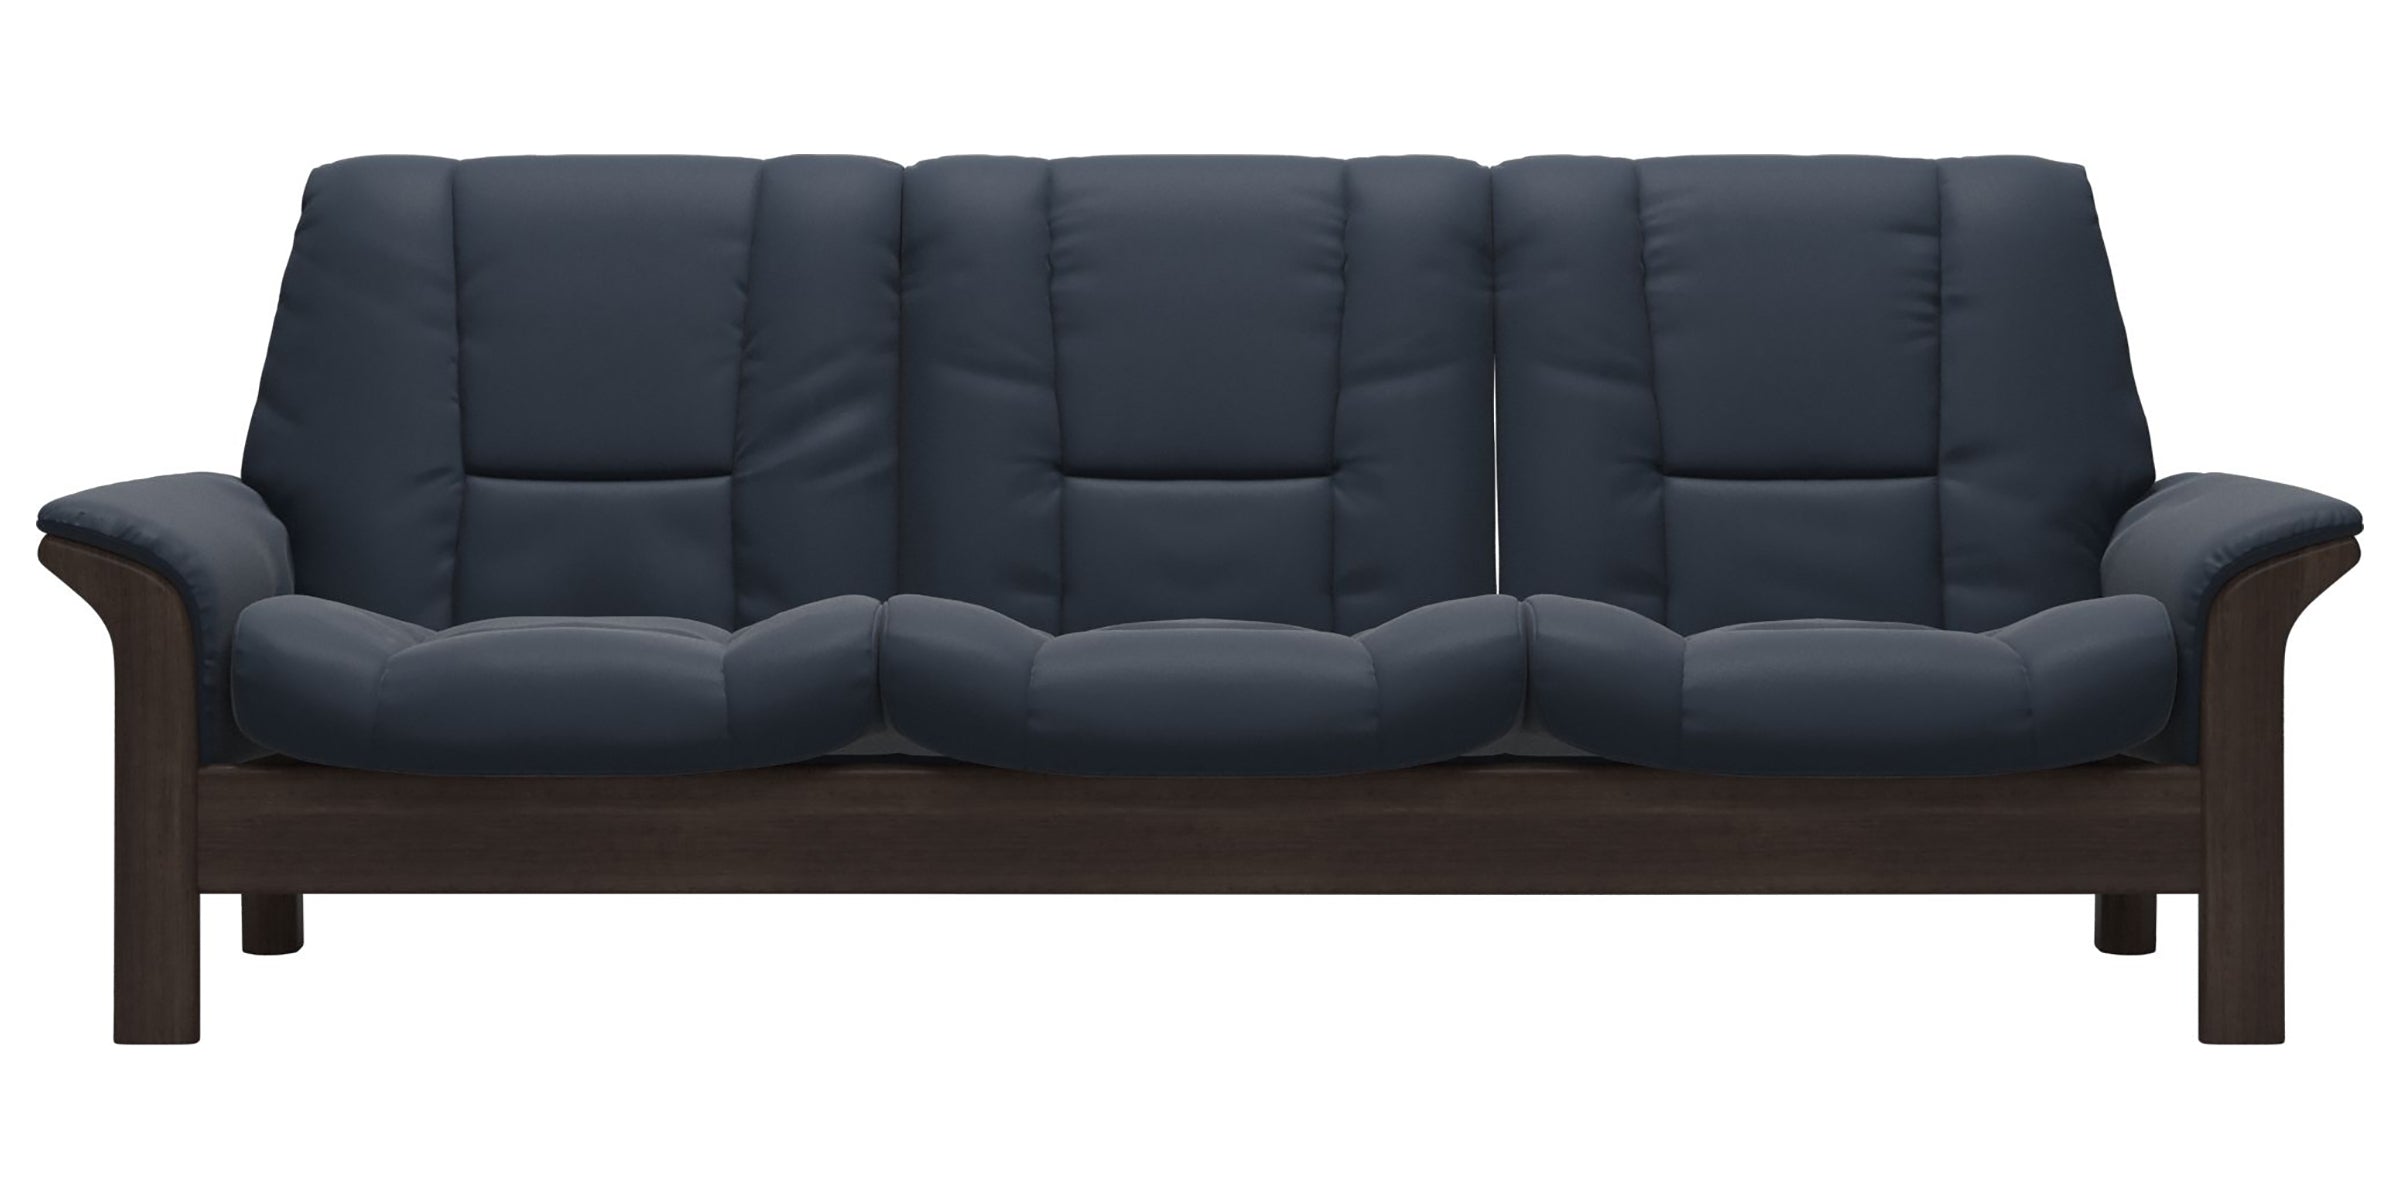 Paloma Leather Oxford Blue and Wenge Base | Stressless Buckingham 3-Seater Low Back Sofa | Valley Ridge Furniture